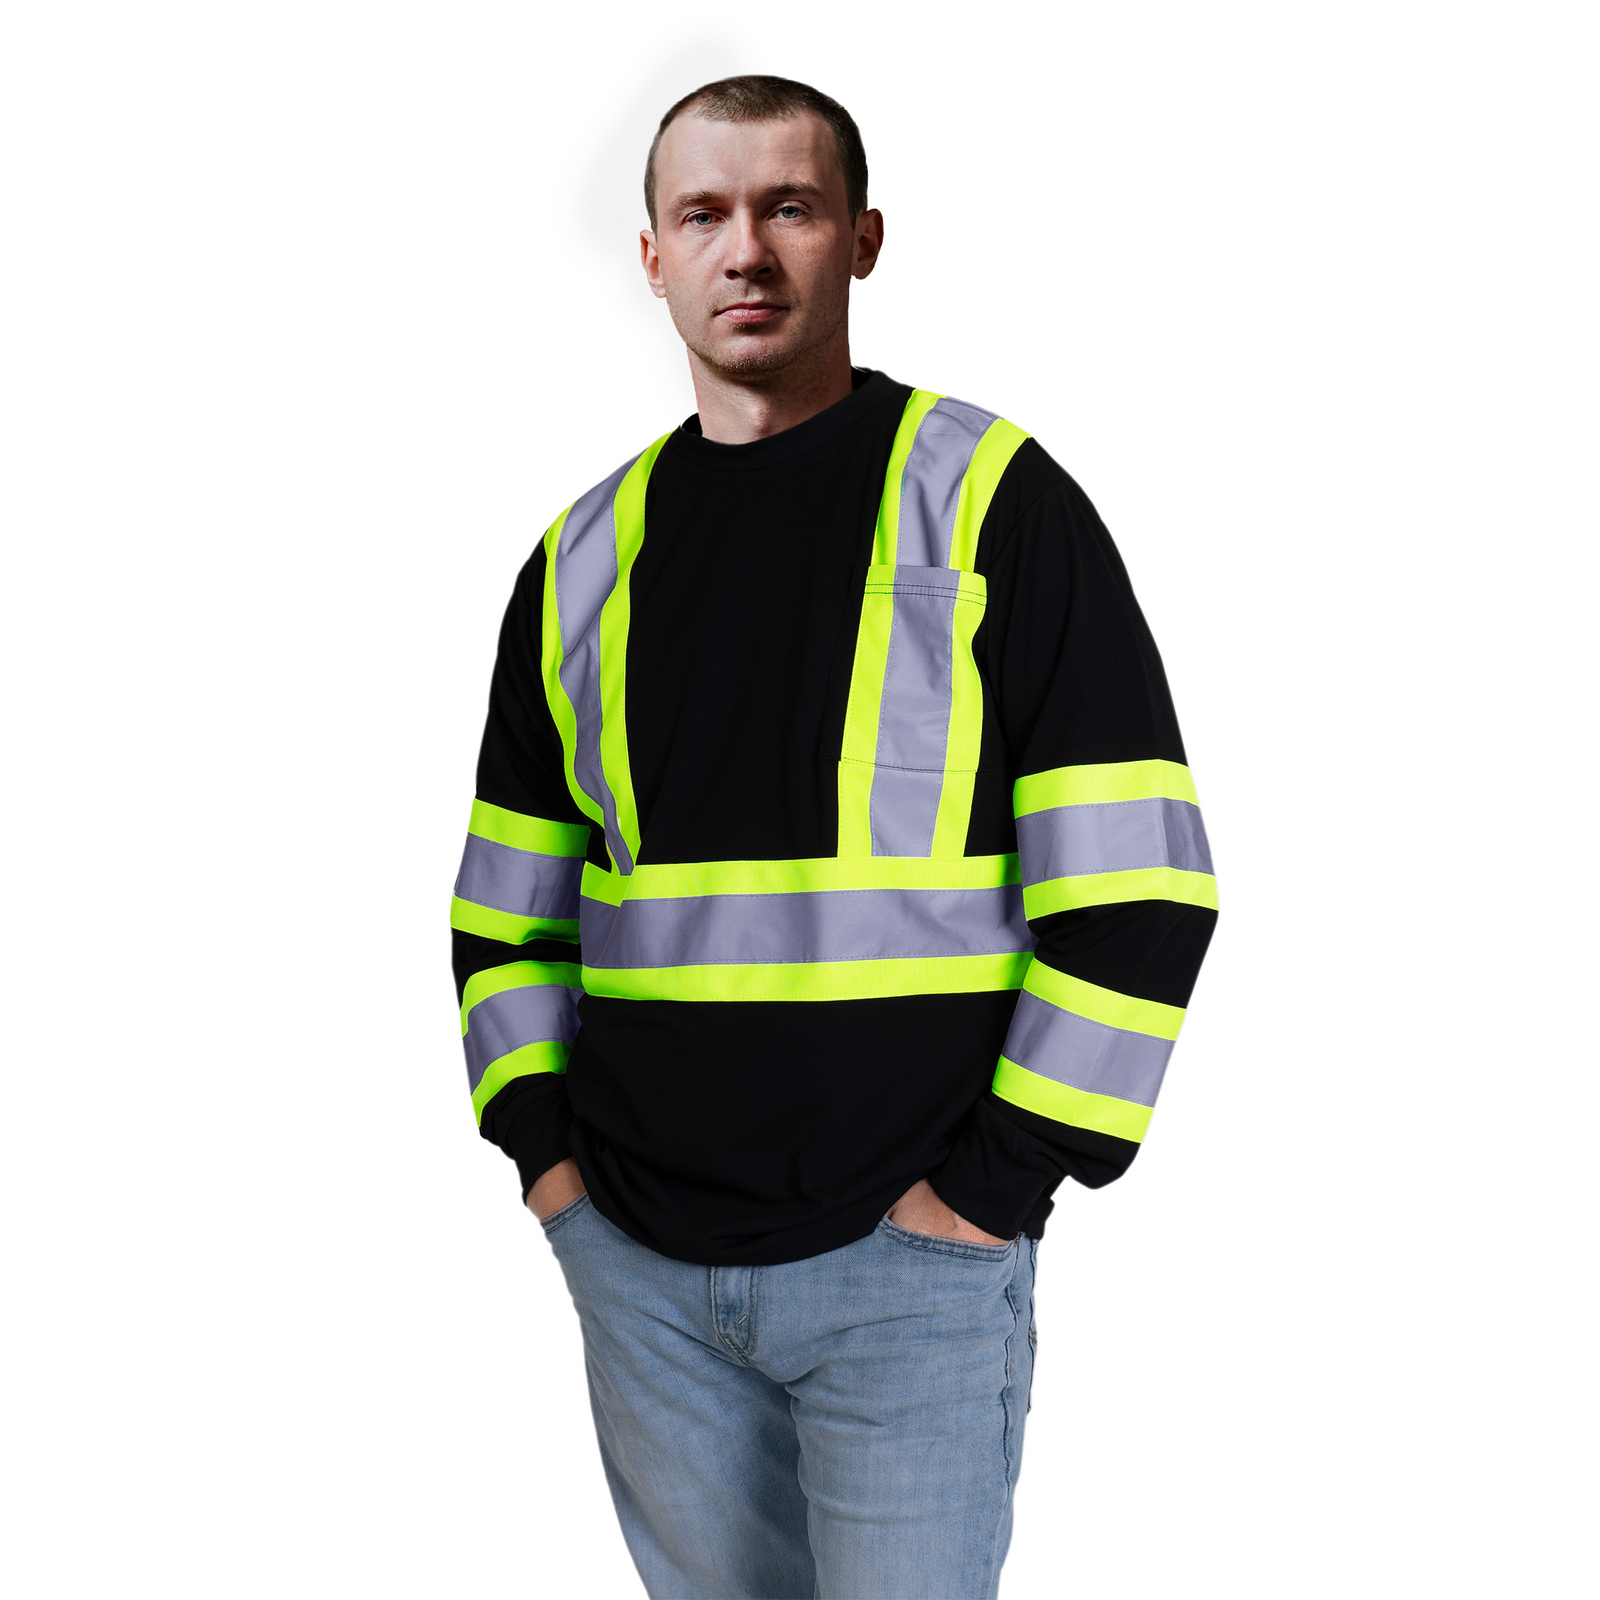 A man wearing the long sleeve black and yellow hi-vis JORESTECH safety long sleeve shirt class 1 type O